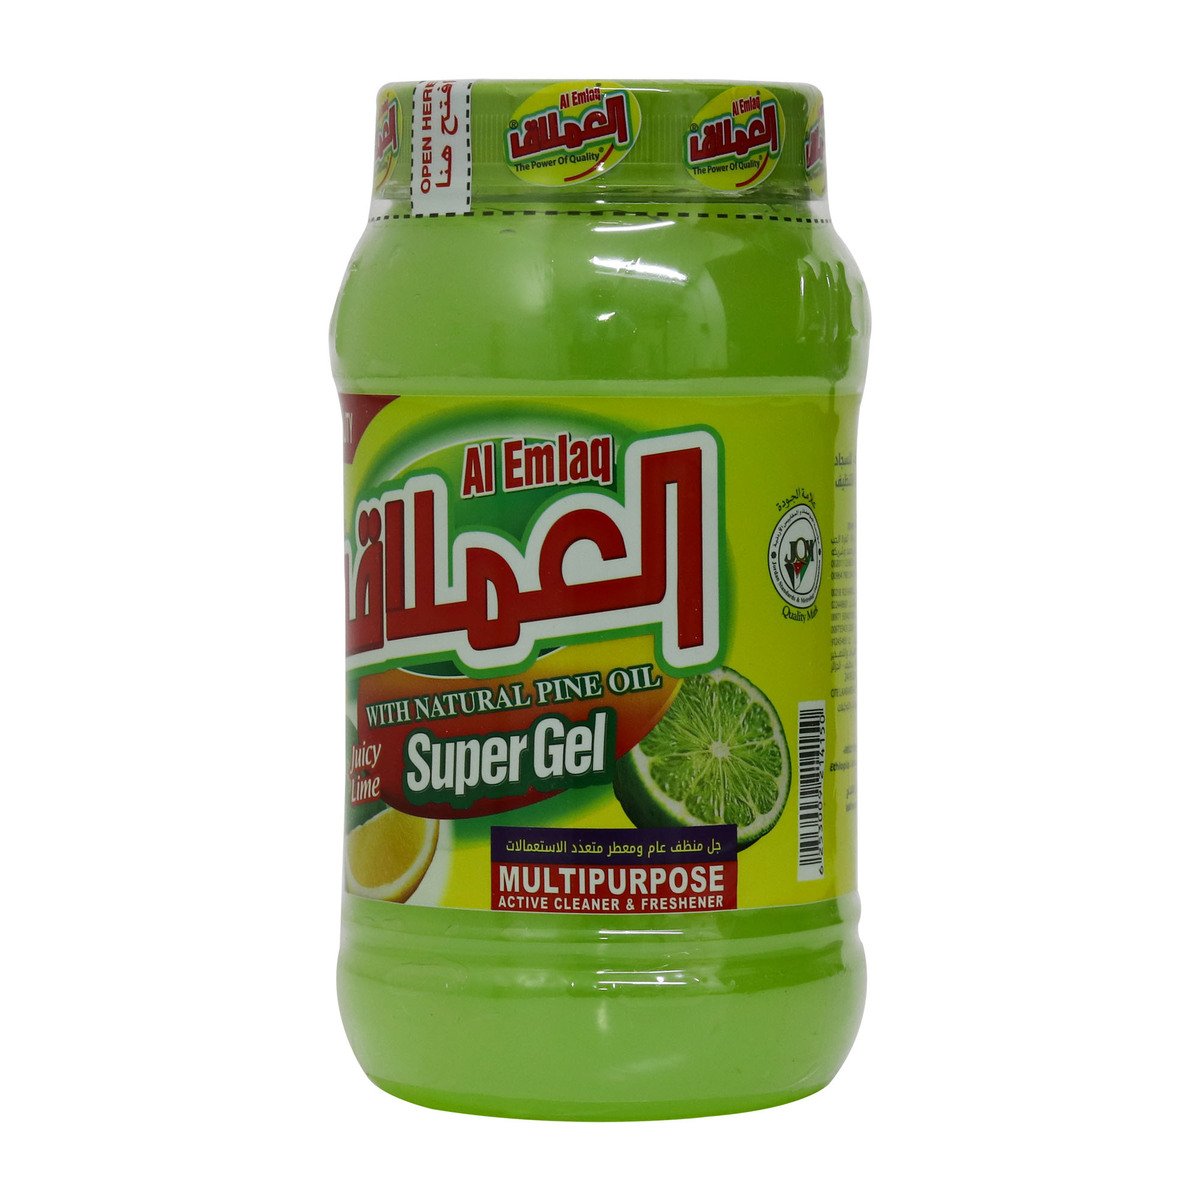 Al Emlaq Multi-Purpose Super Gel Juicy Lime 500g